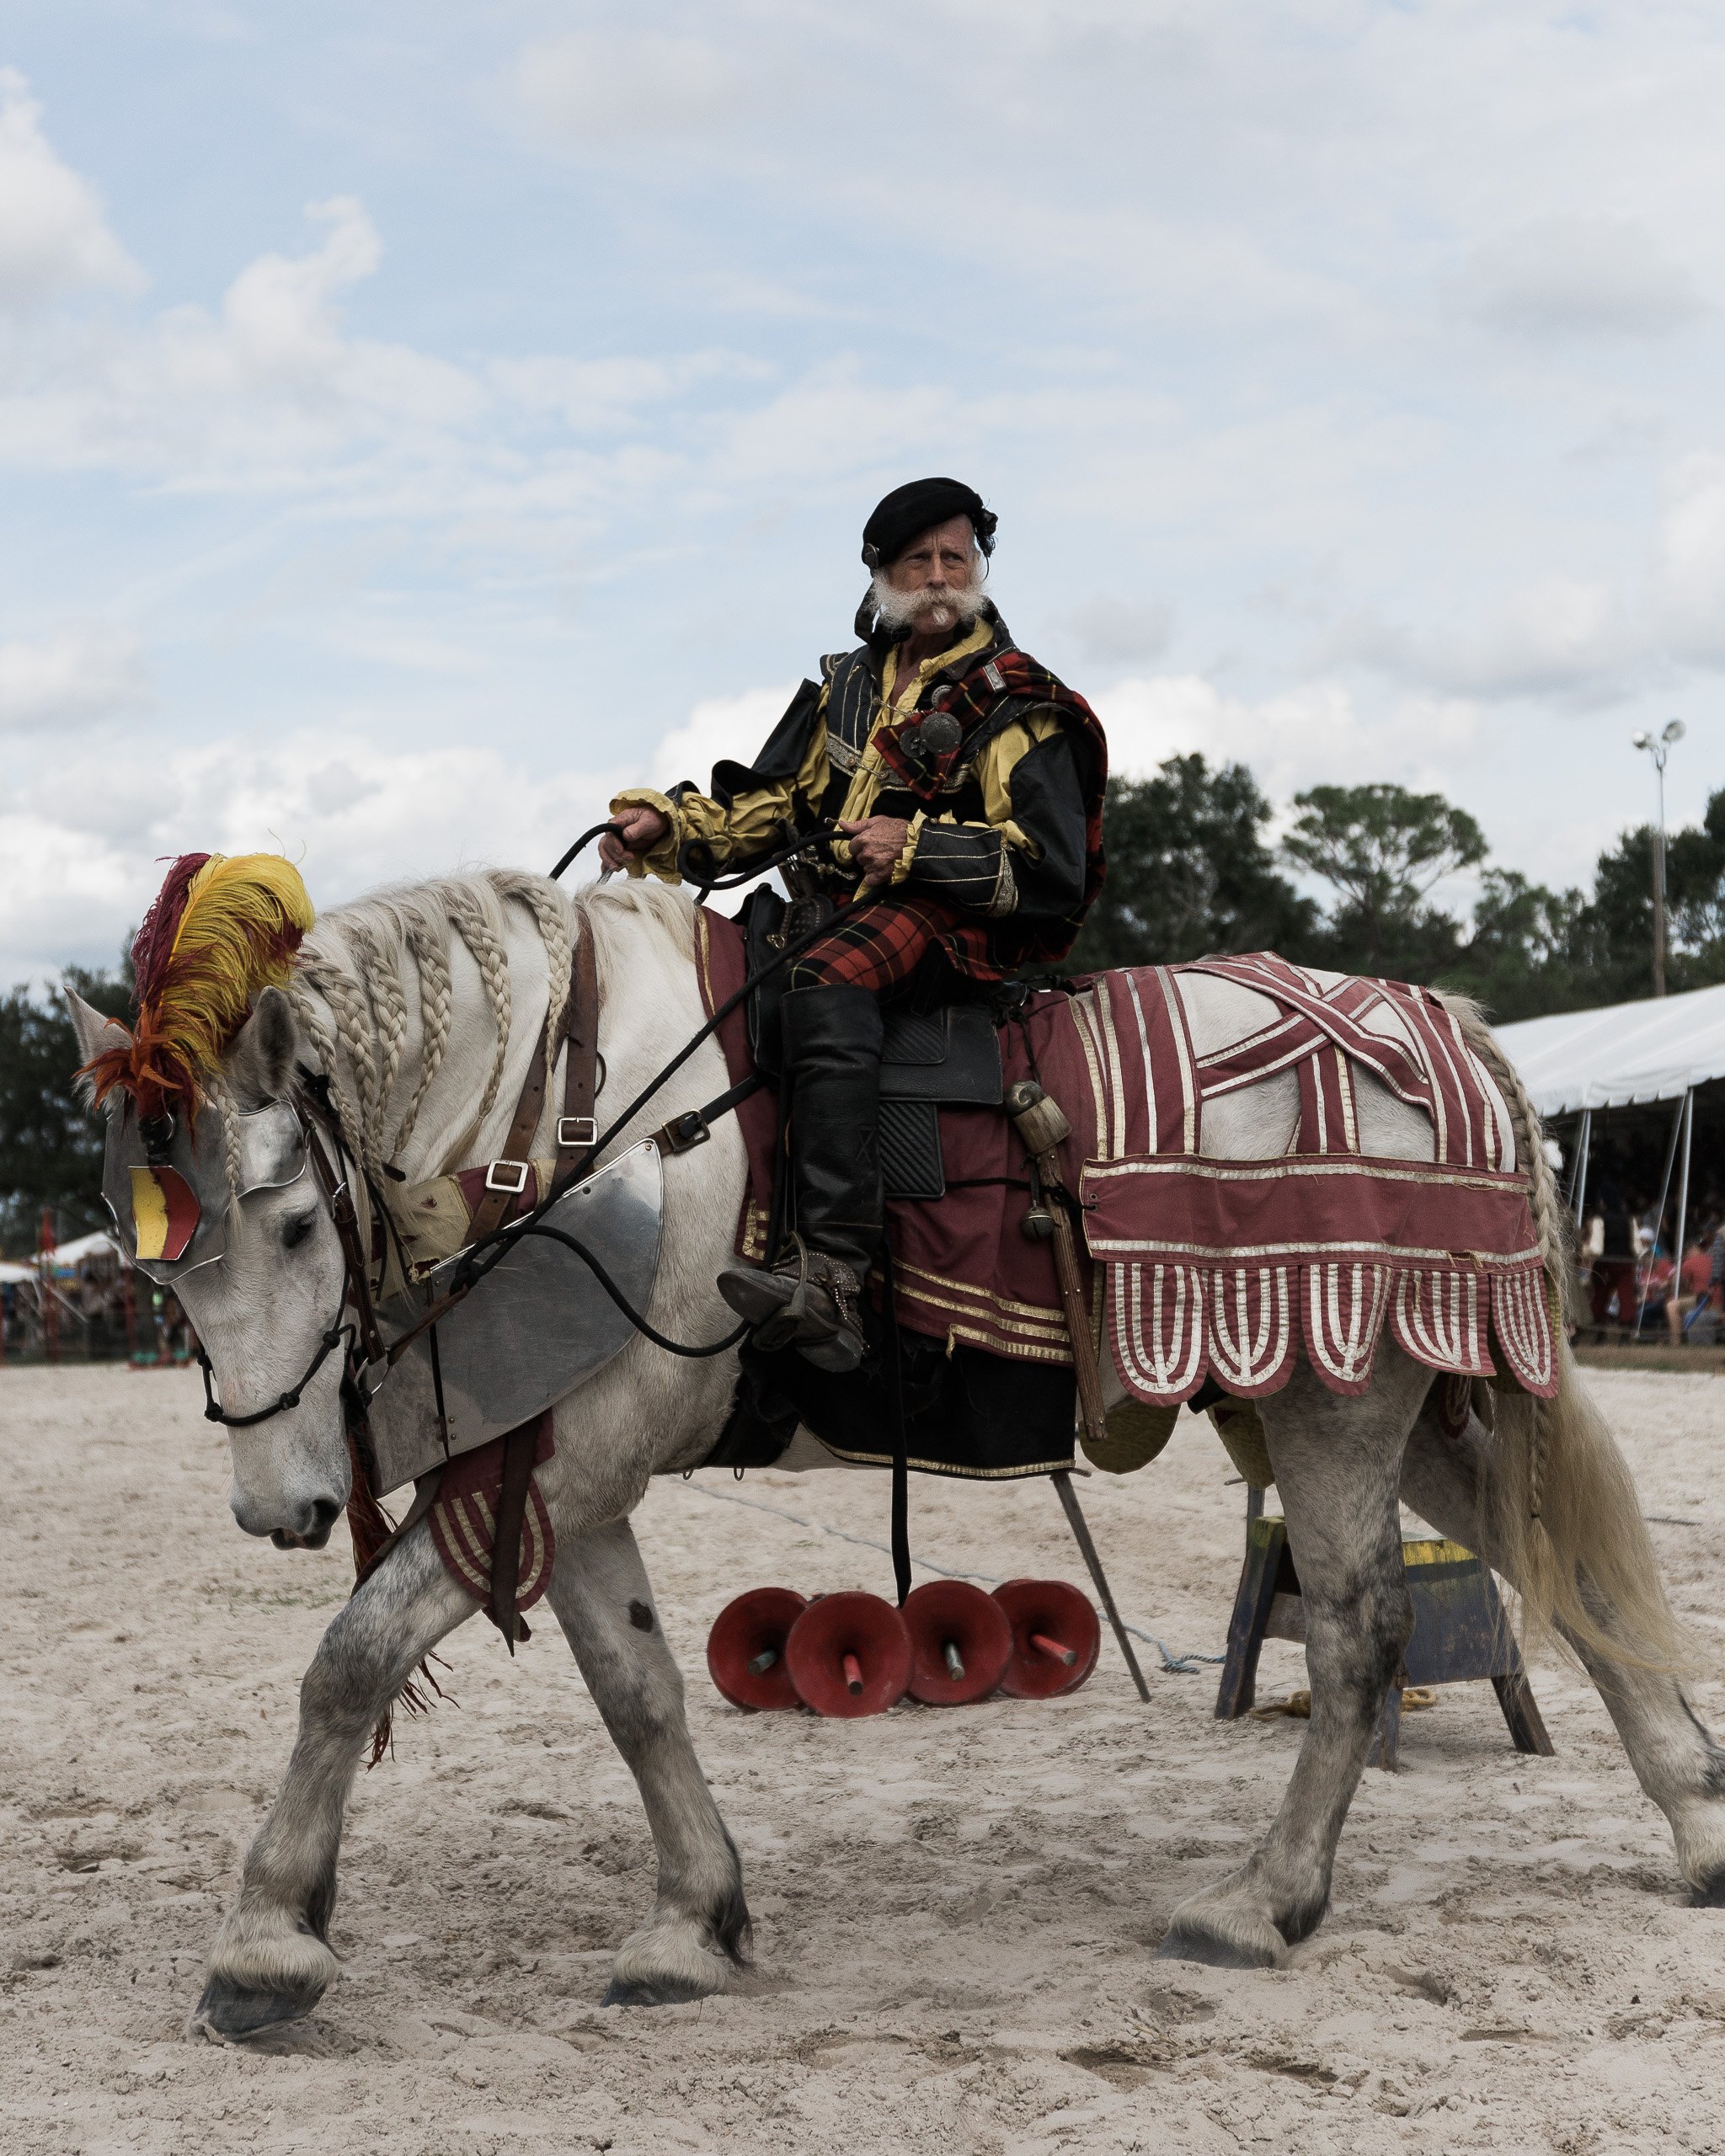 event-sarasota-medieval-rennaisance-fair-festival-costume-viking-cosplay_Nashville-Tennessee_Madison-Greer-Photography_0003.jpg